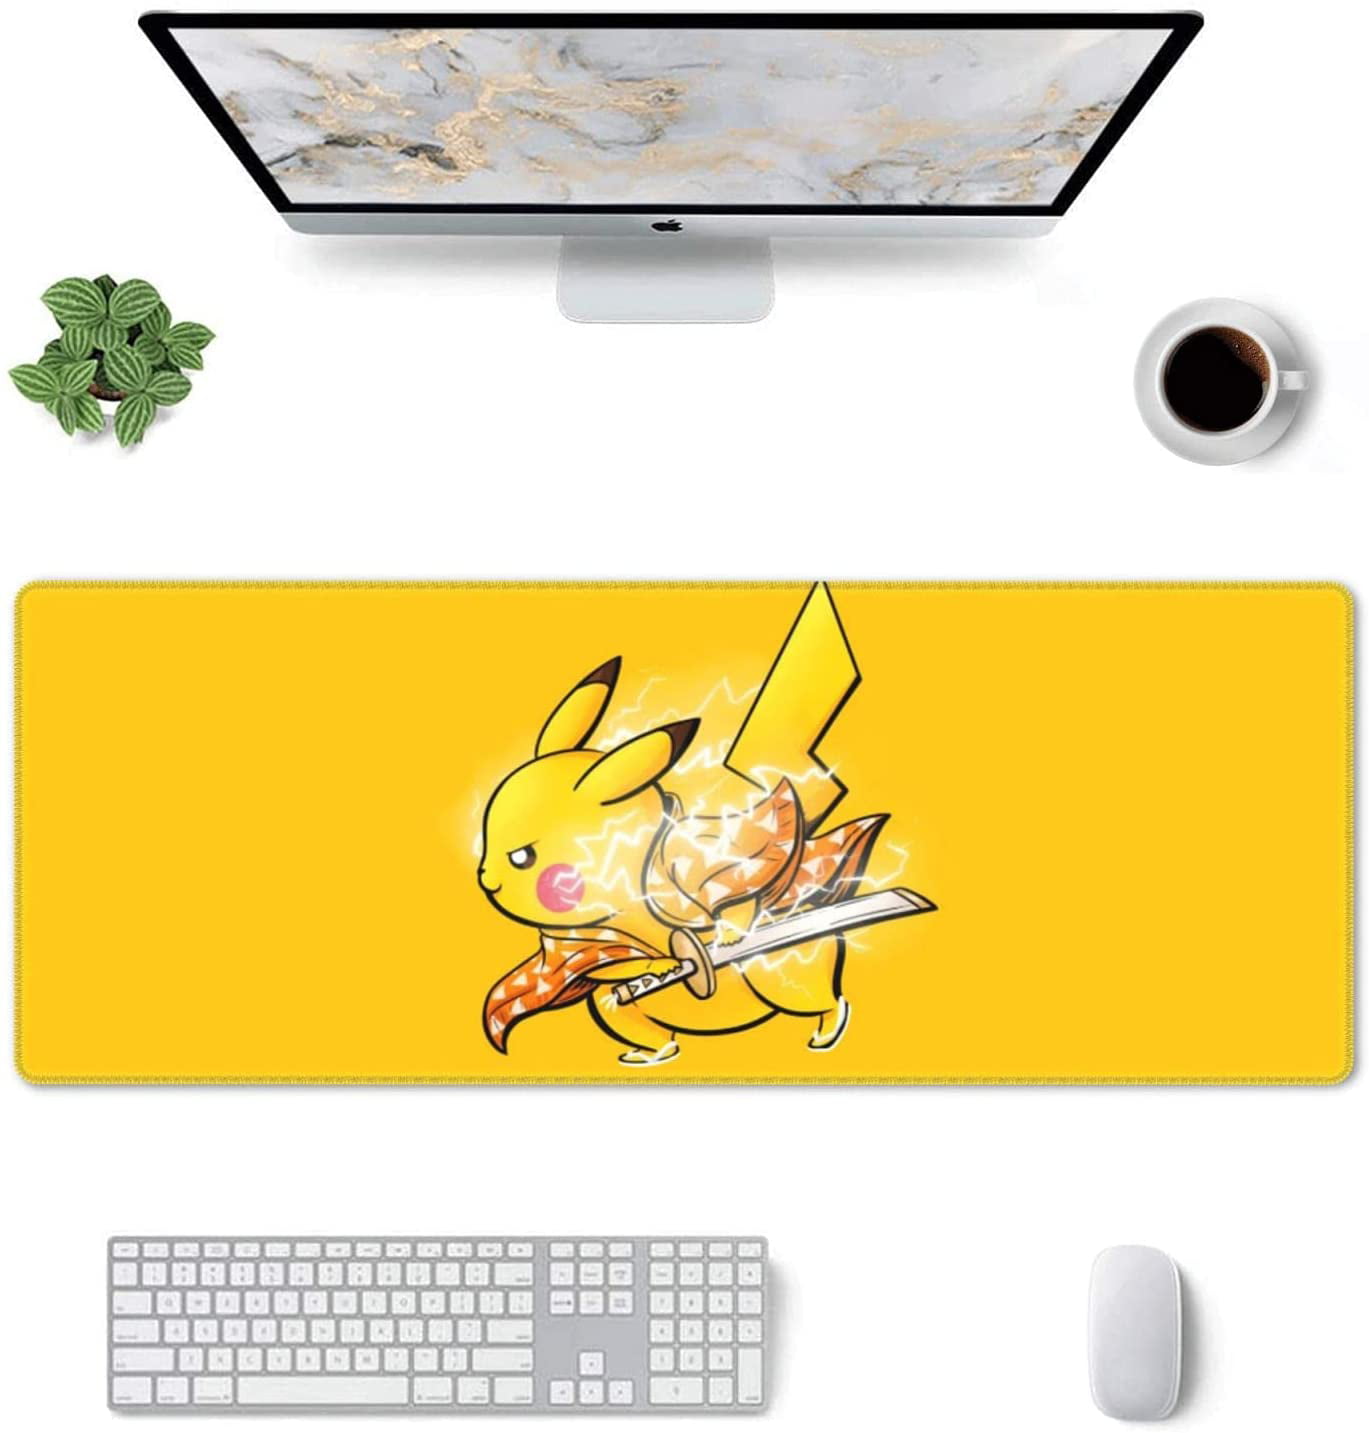 Anime Mouse Pads  Desk Mats for Sale  Redbubble